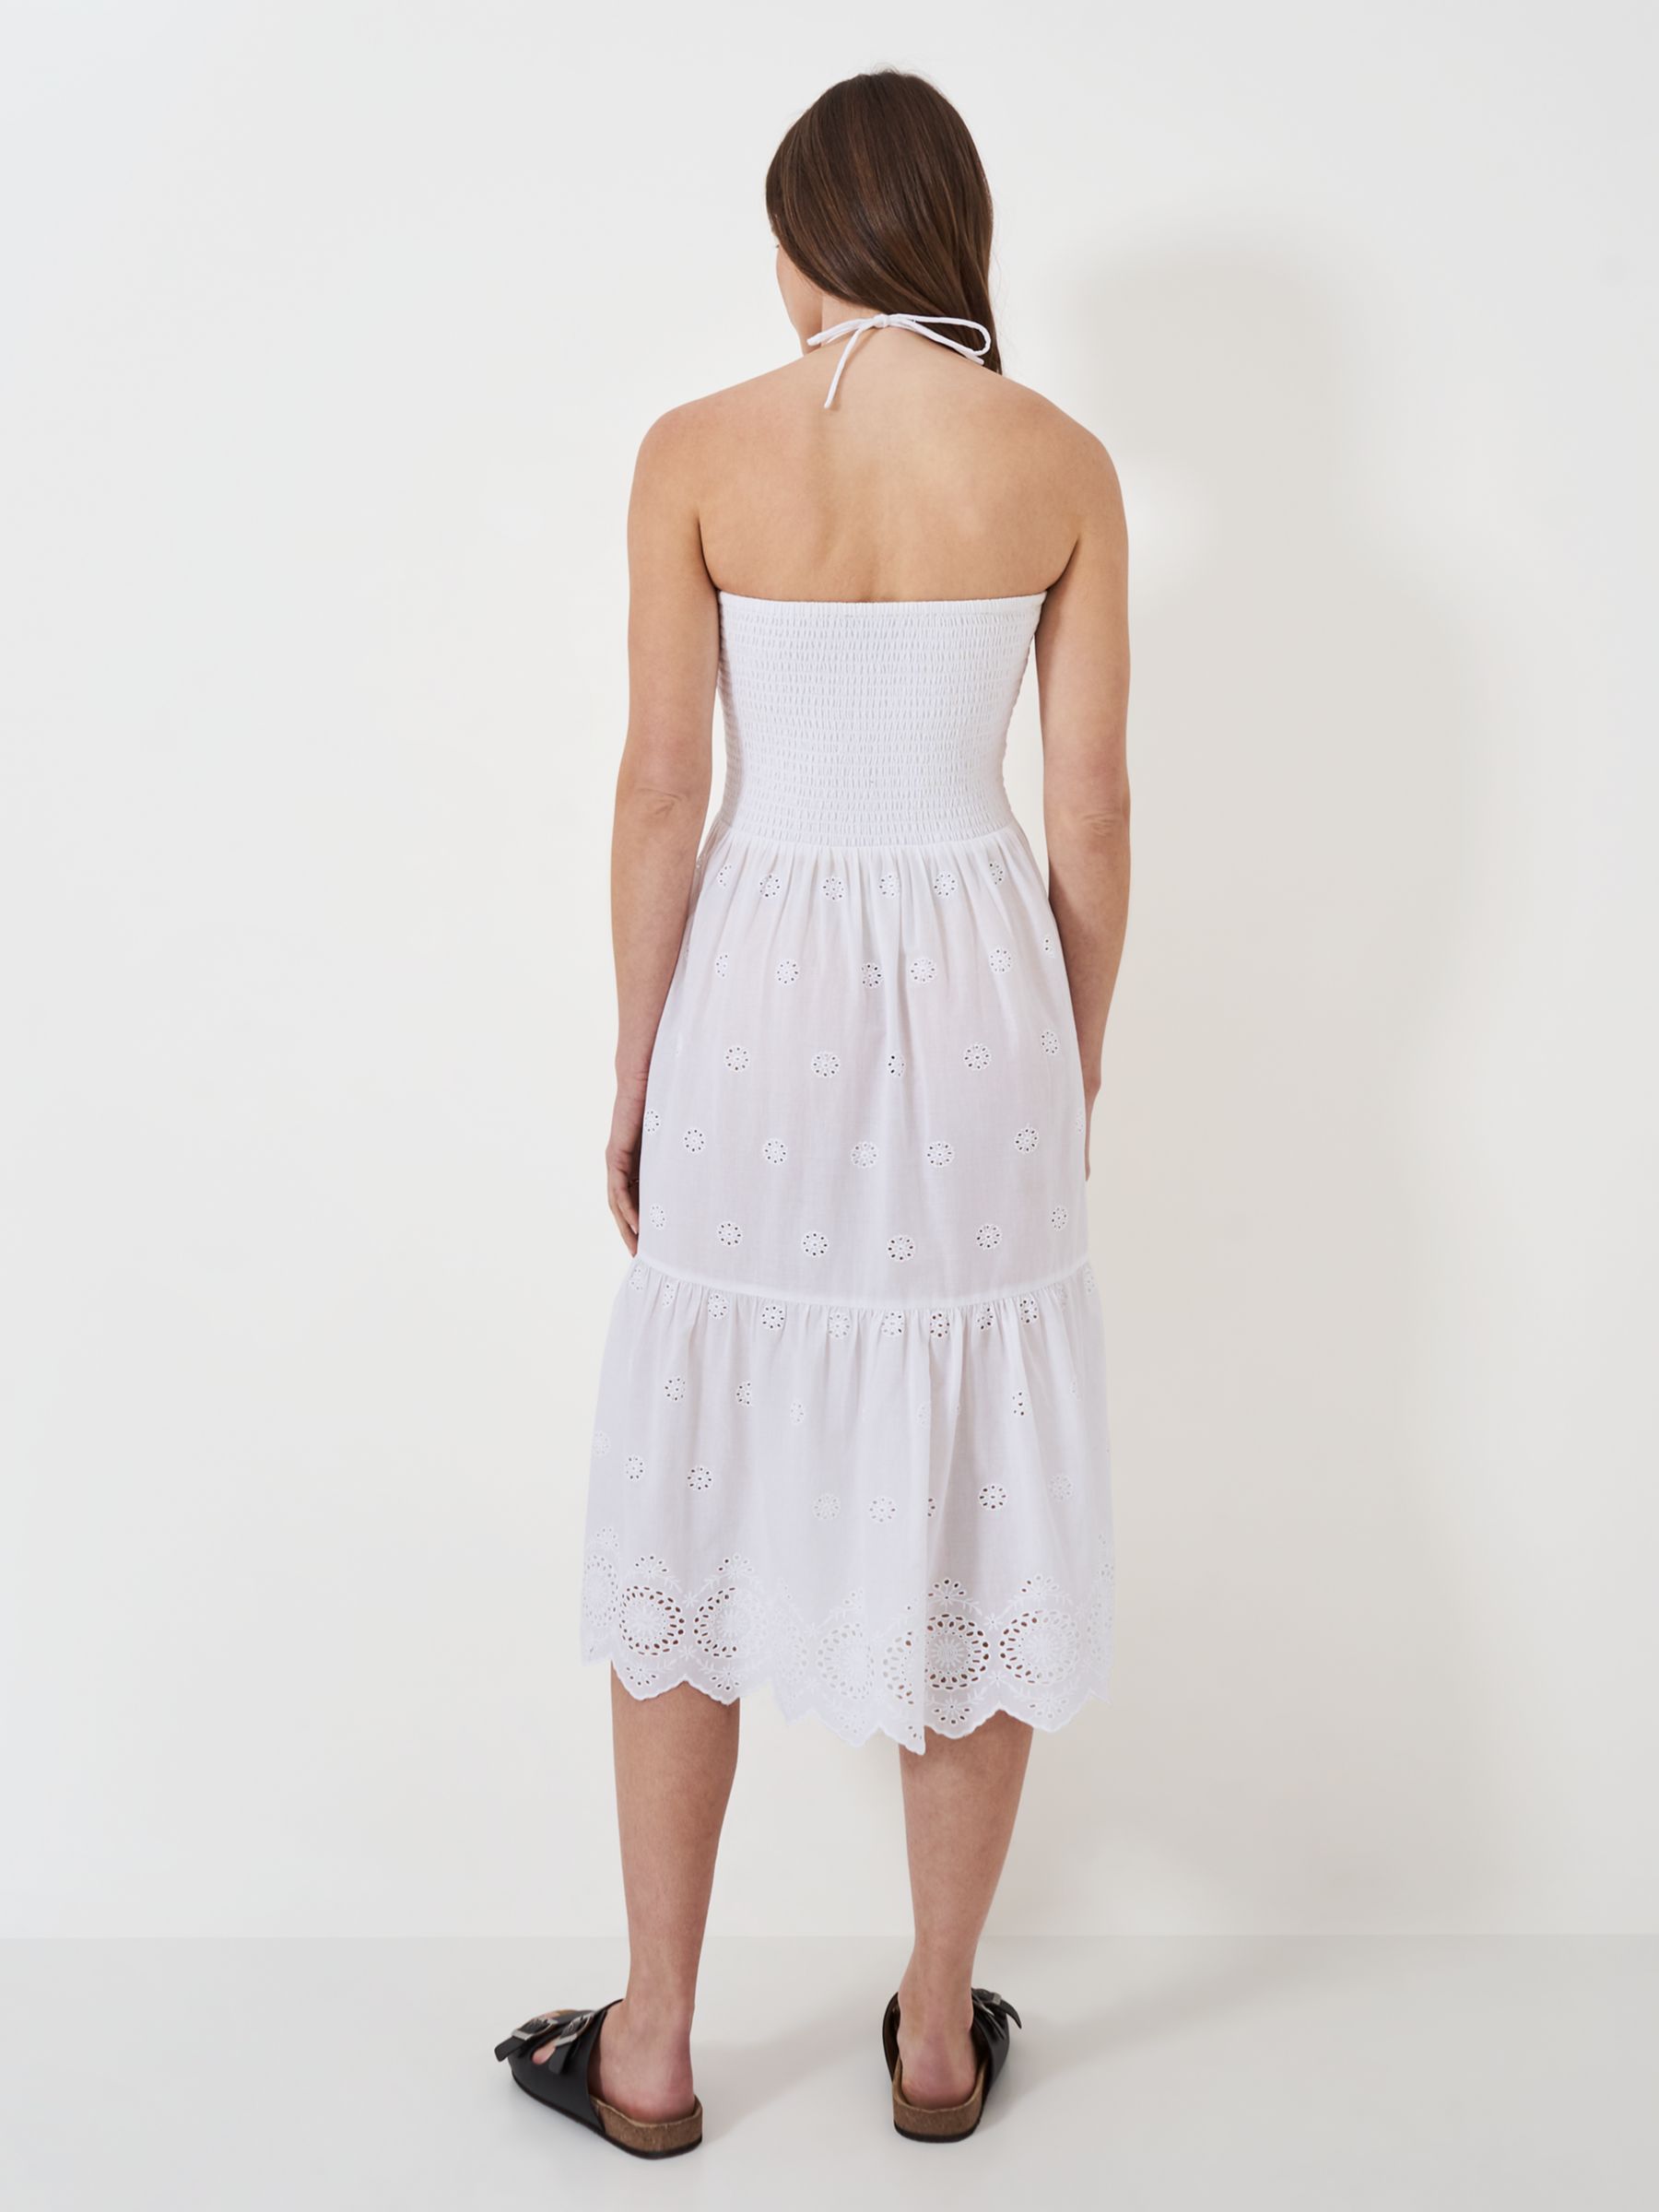 Crew Clothing Broderie Detail  2-in-1 Dress & Skirt, White, 8